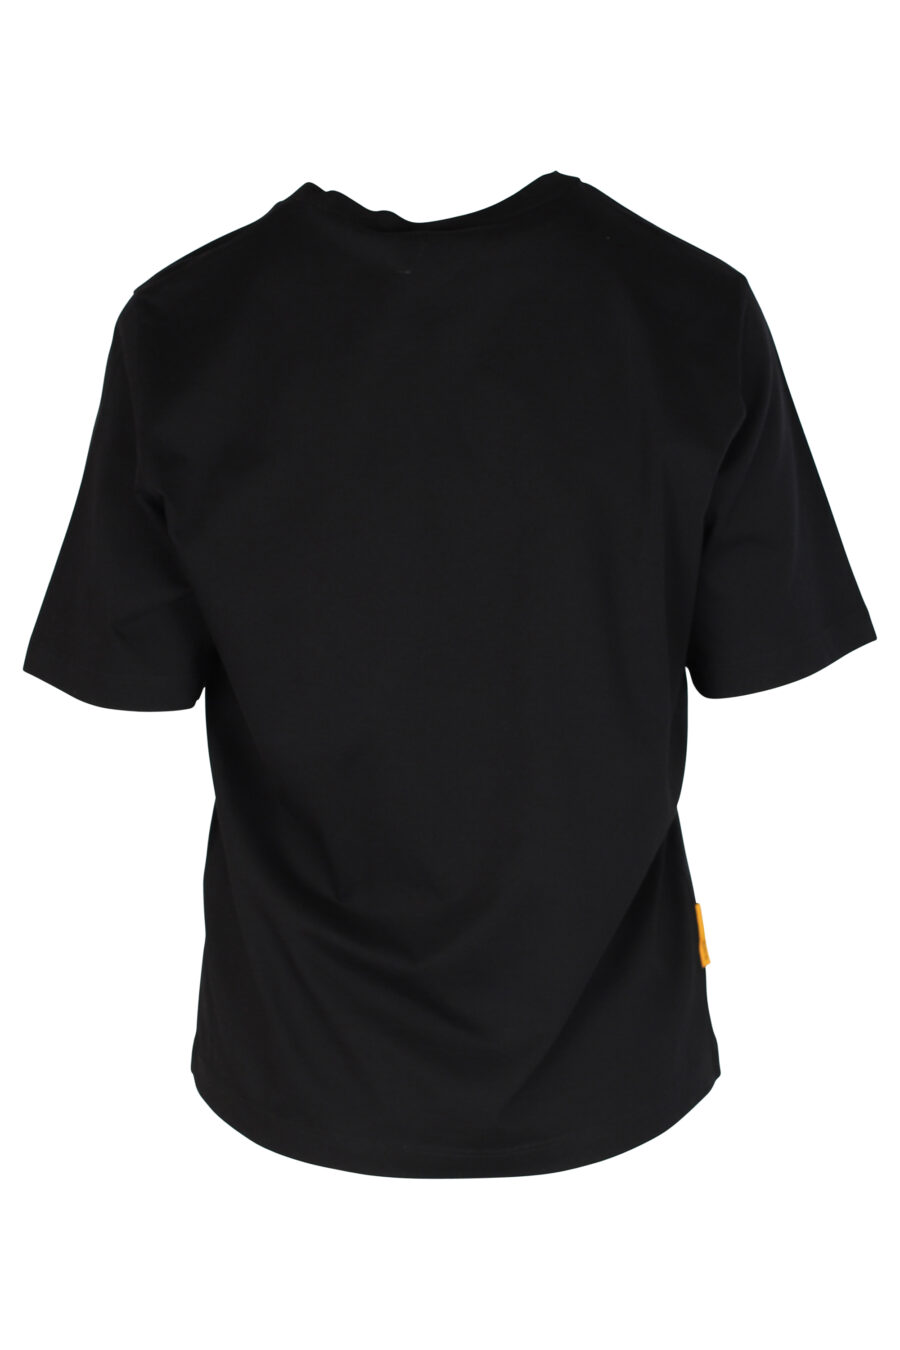 Black T-shirt with "Pac-man" logo - 8054148185558 2